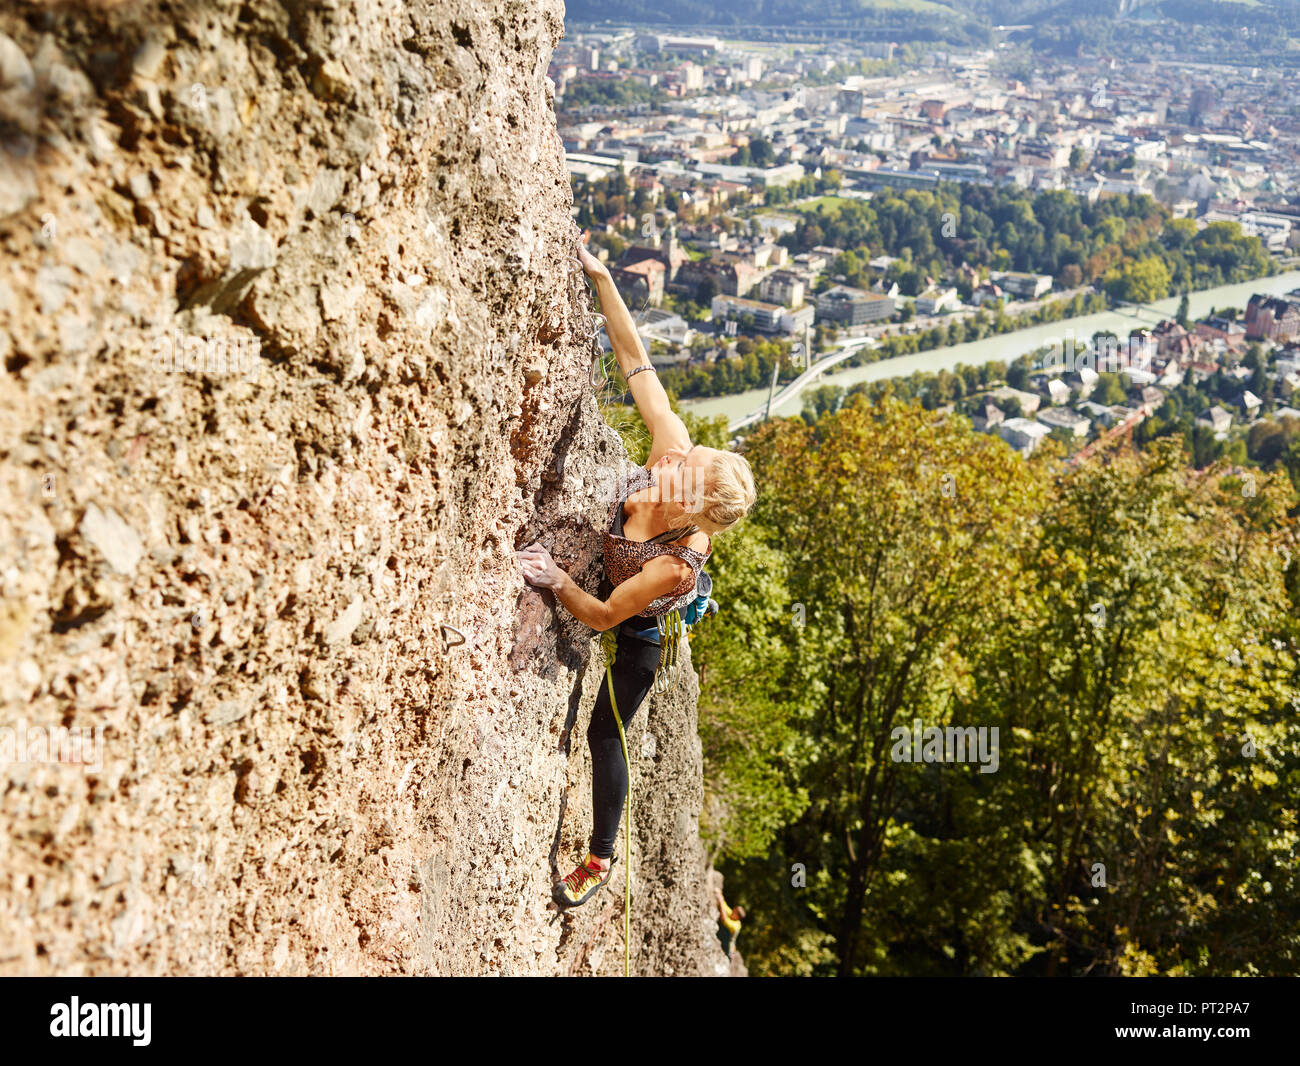 Austria, Innsbruck, Hoettingen quarry, woman climbing in rock wall Stock Photo